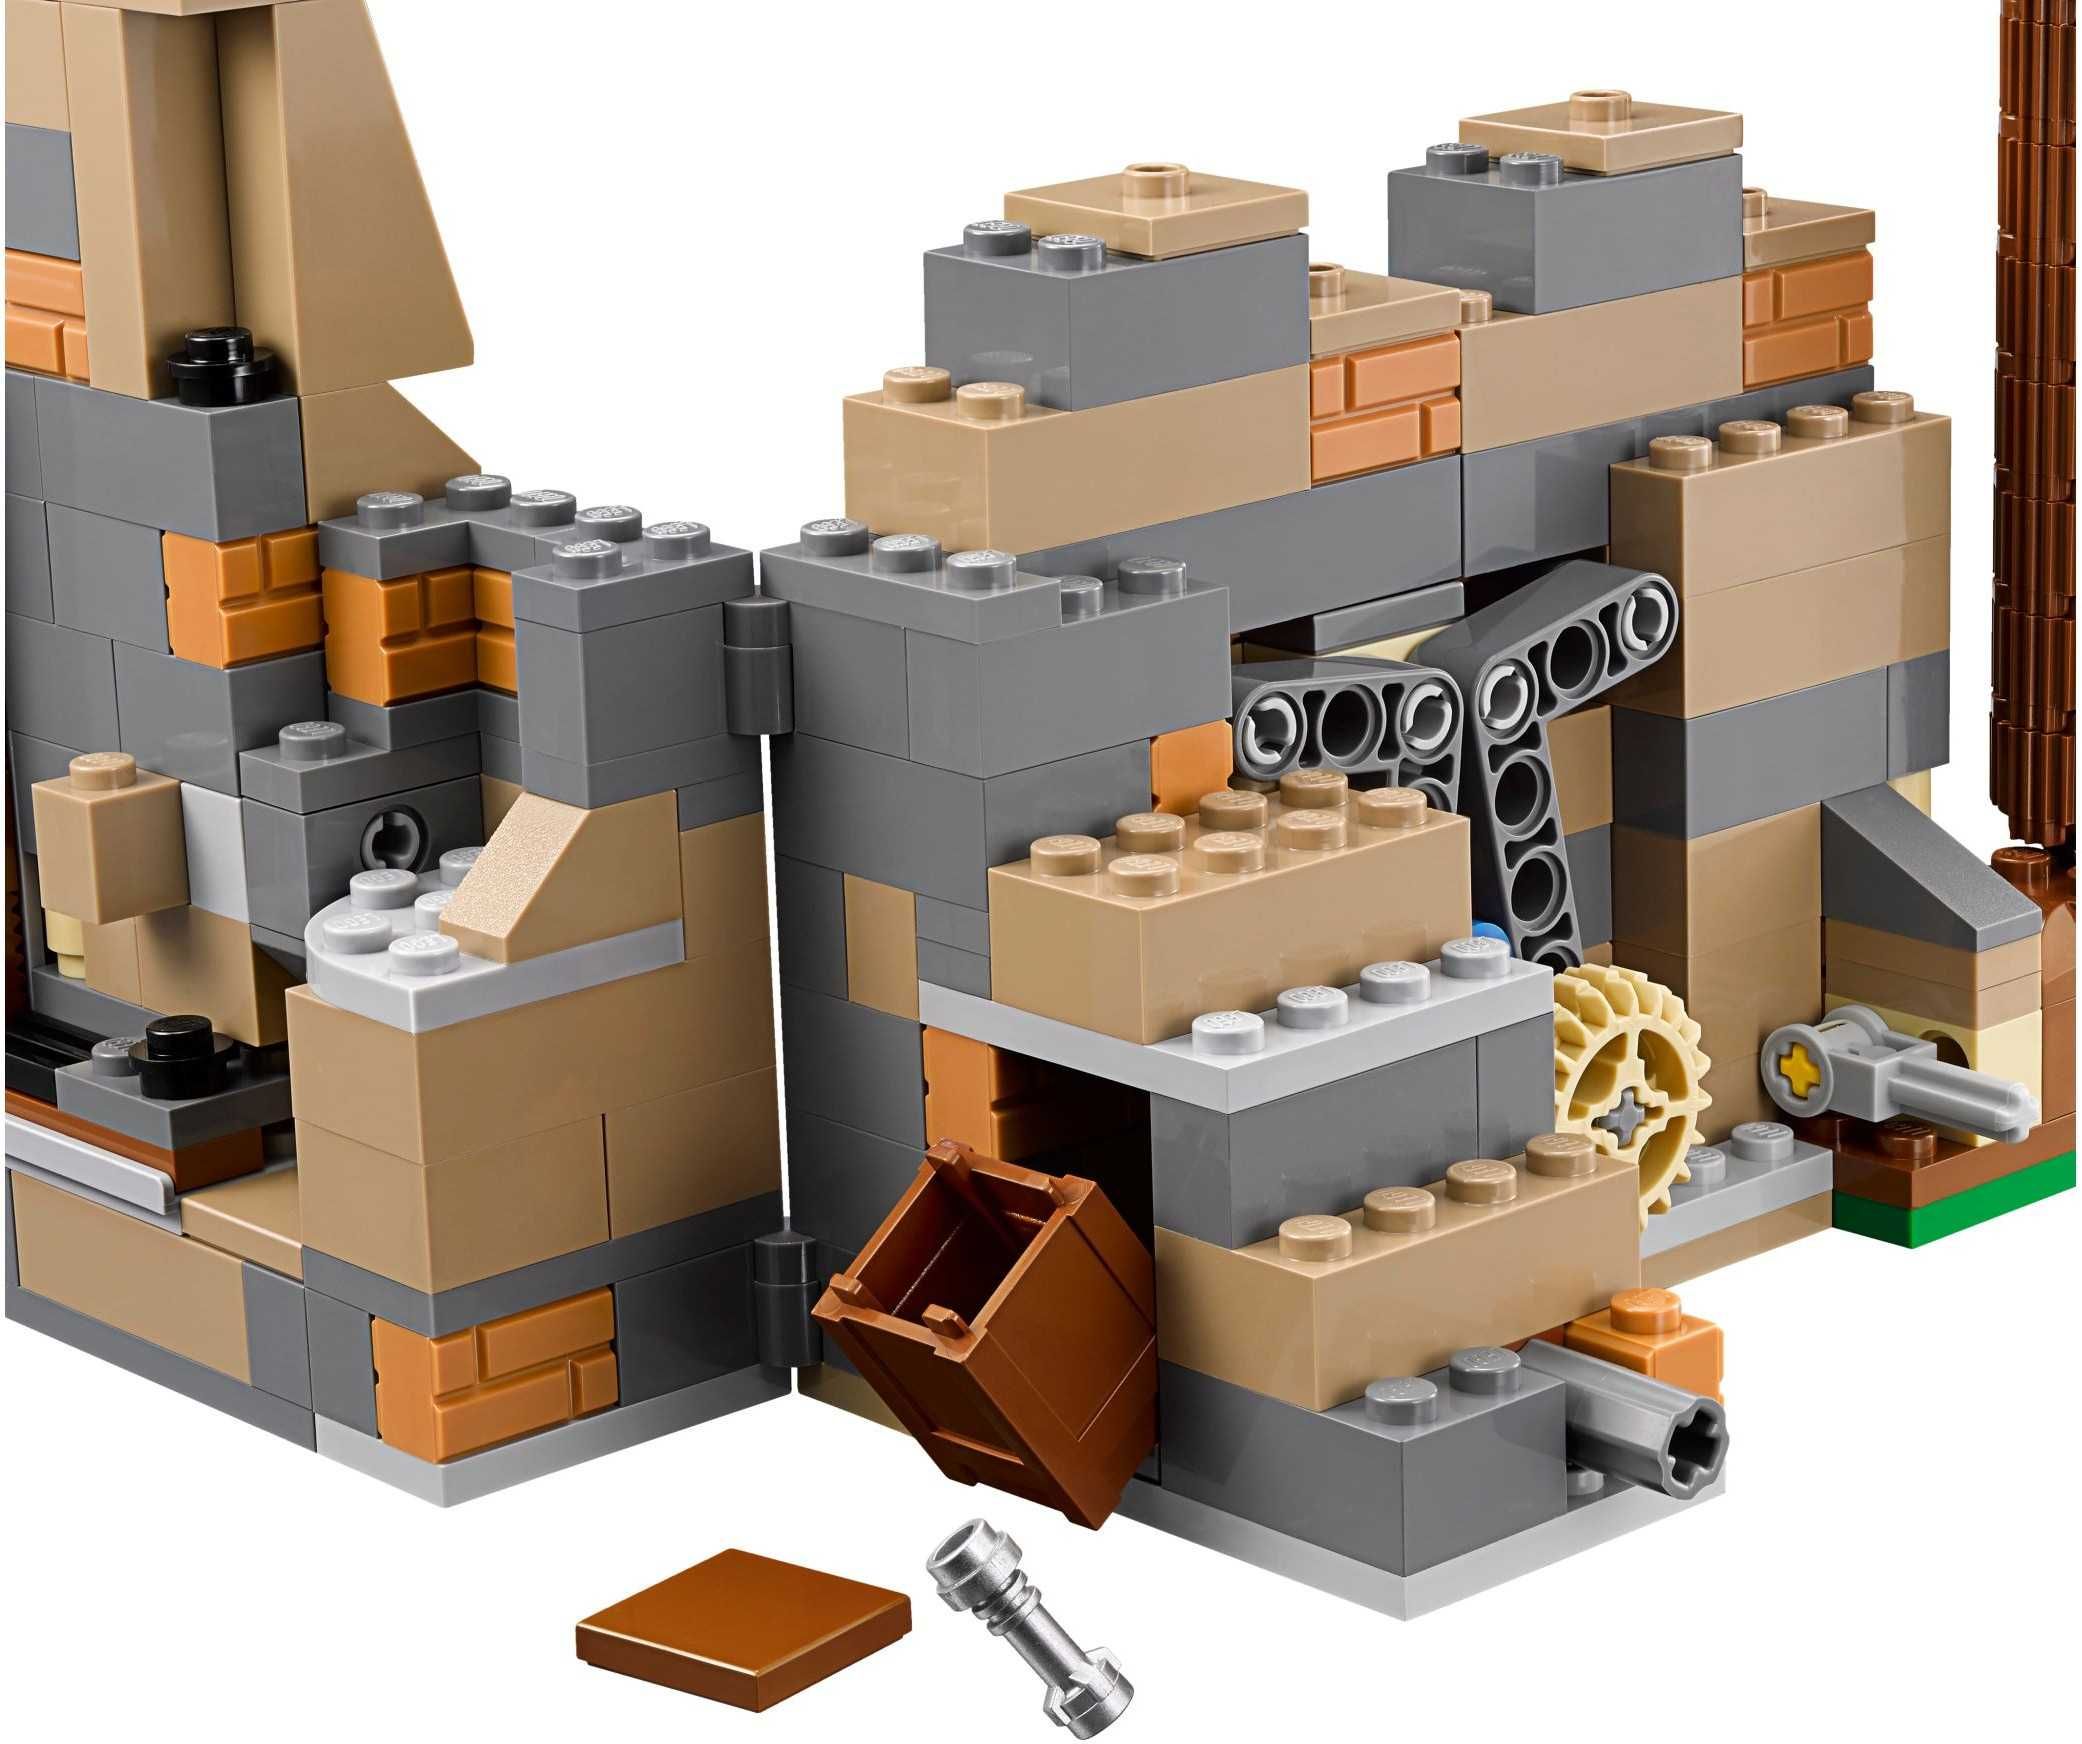 LEGO Star Wars 75139 : Battle on Takodana - set de colectie - Kylo Ren